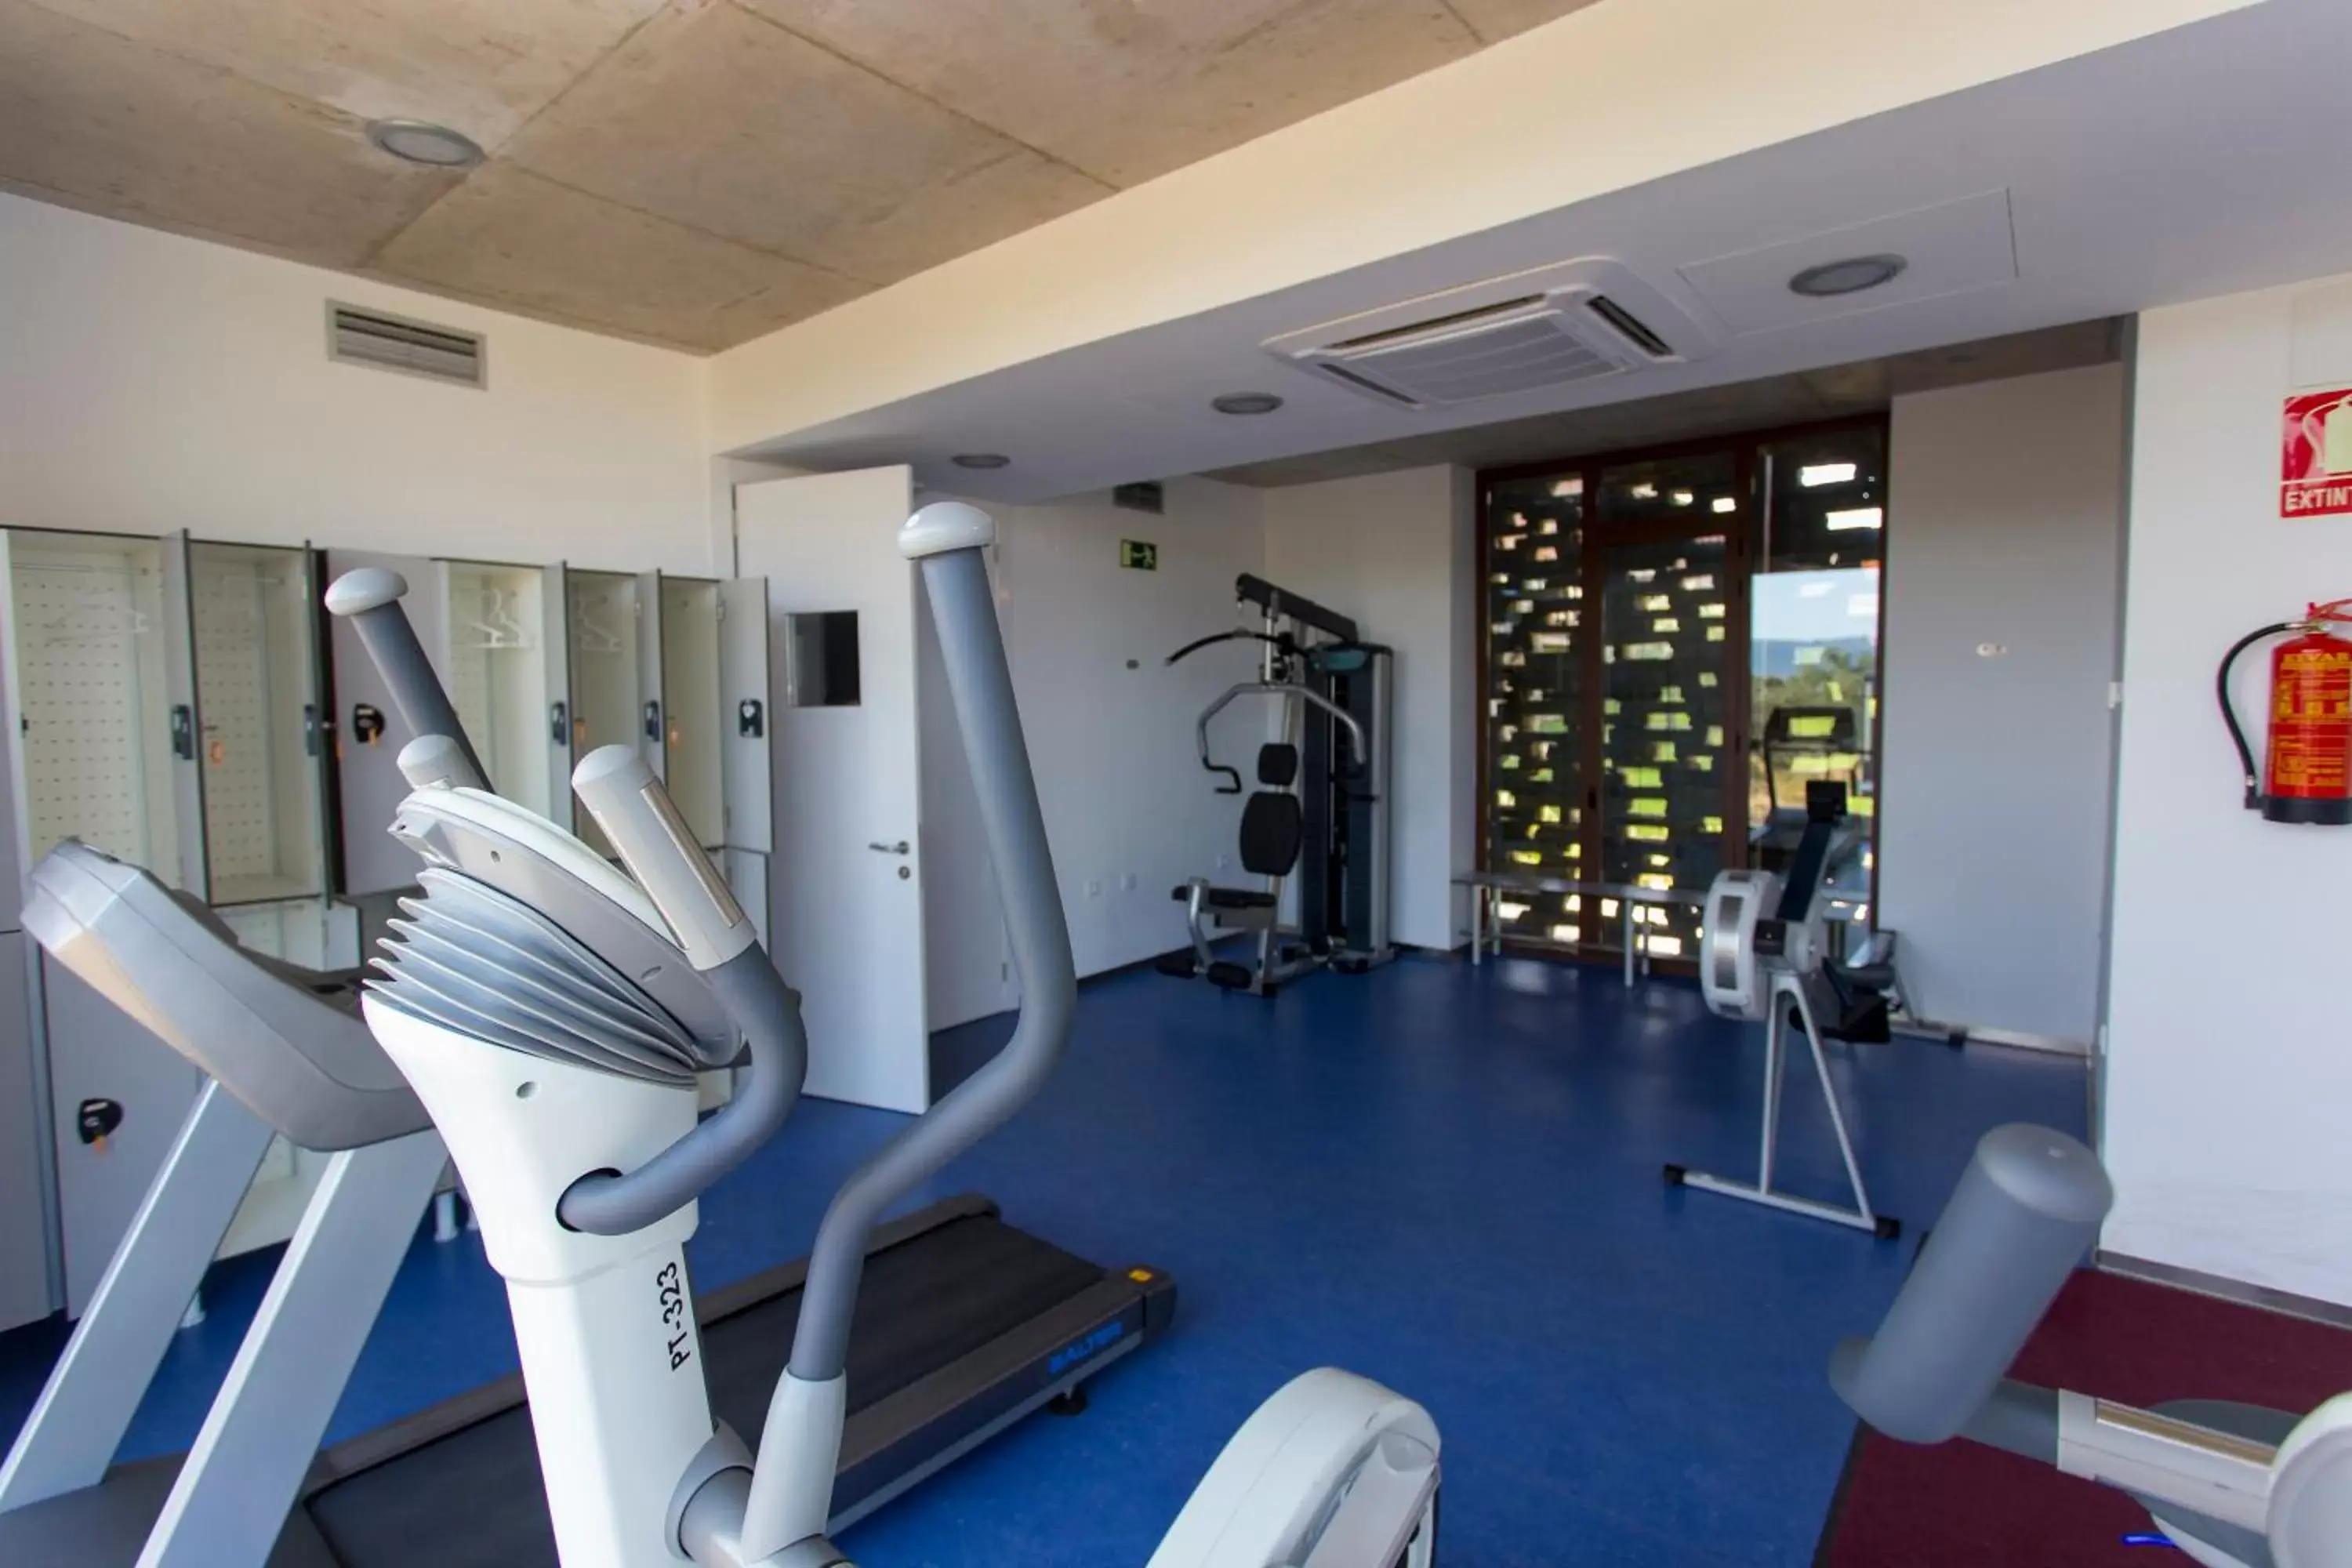 Fitness centre/facilities, Fitness Center/Facilities in Hospederia Parque de Monfragüe